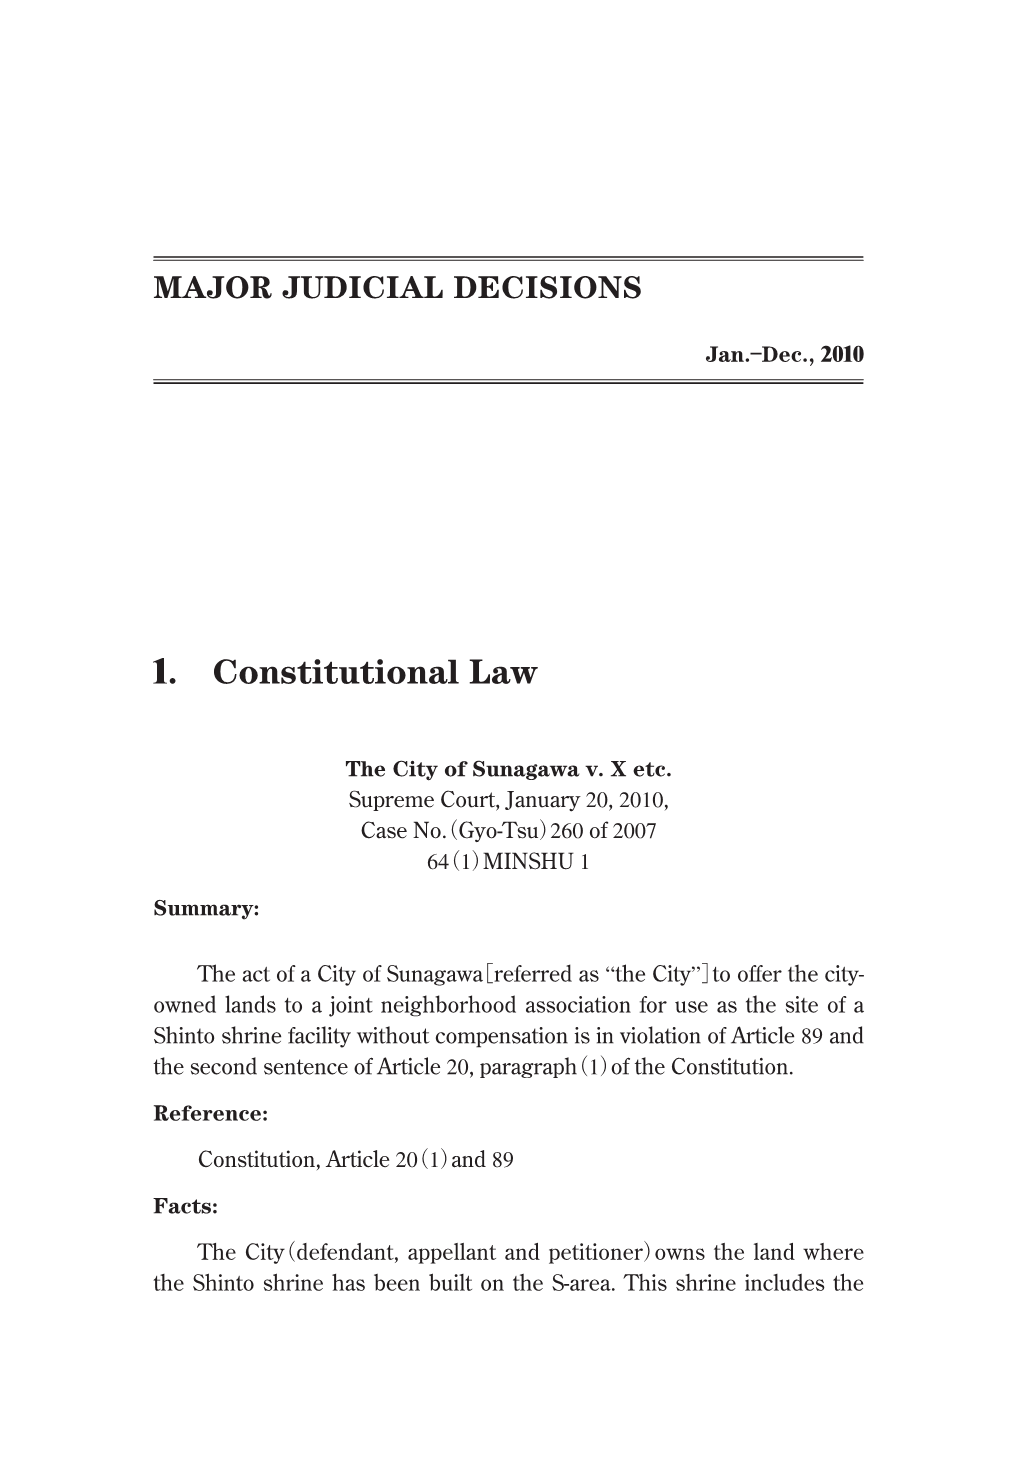 1. Constitutional Law